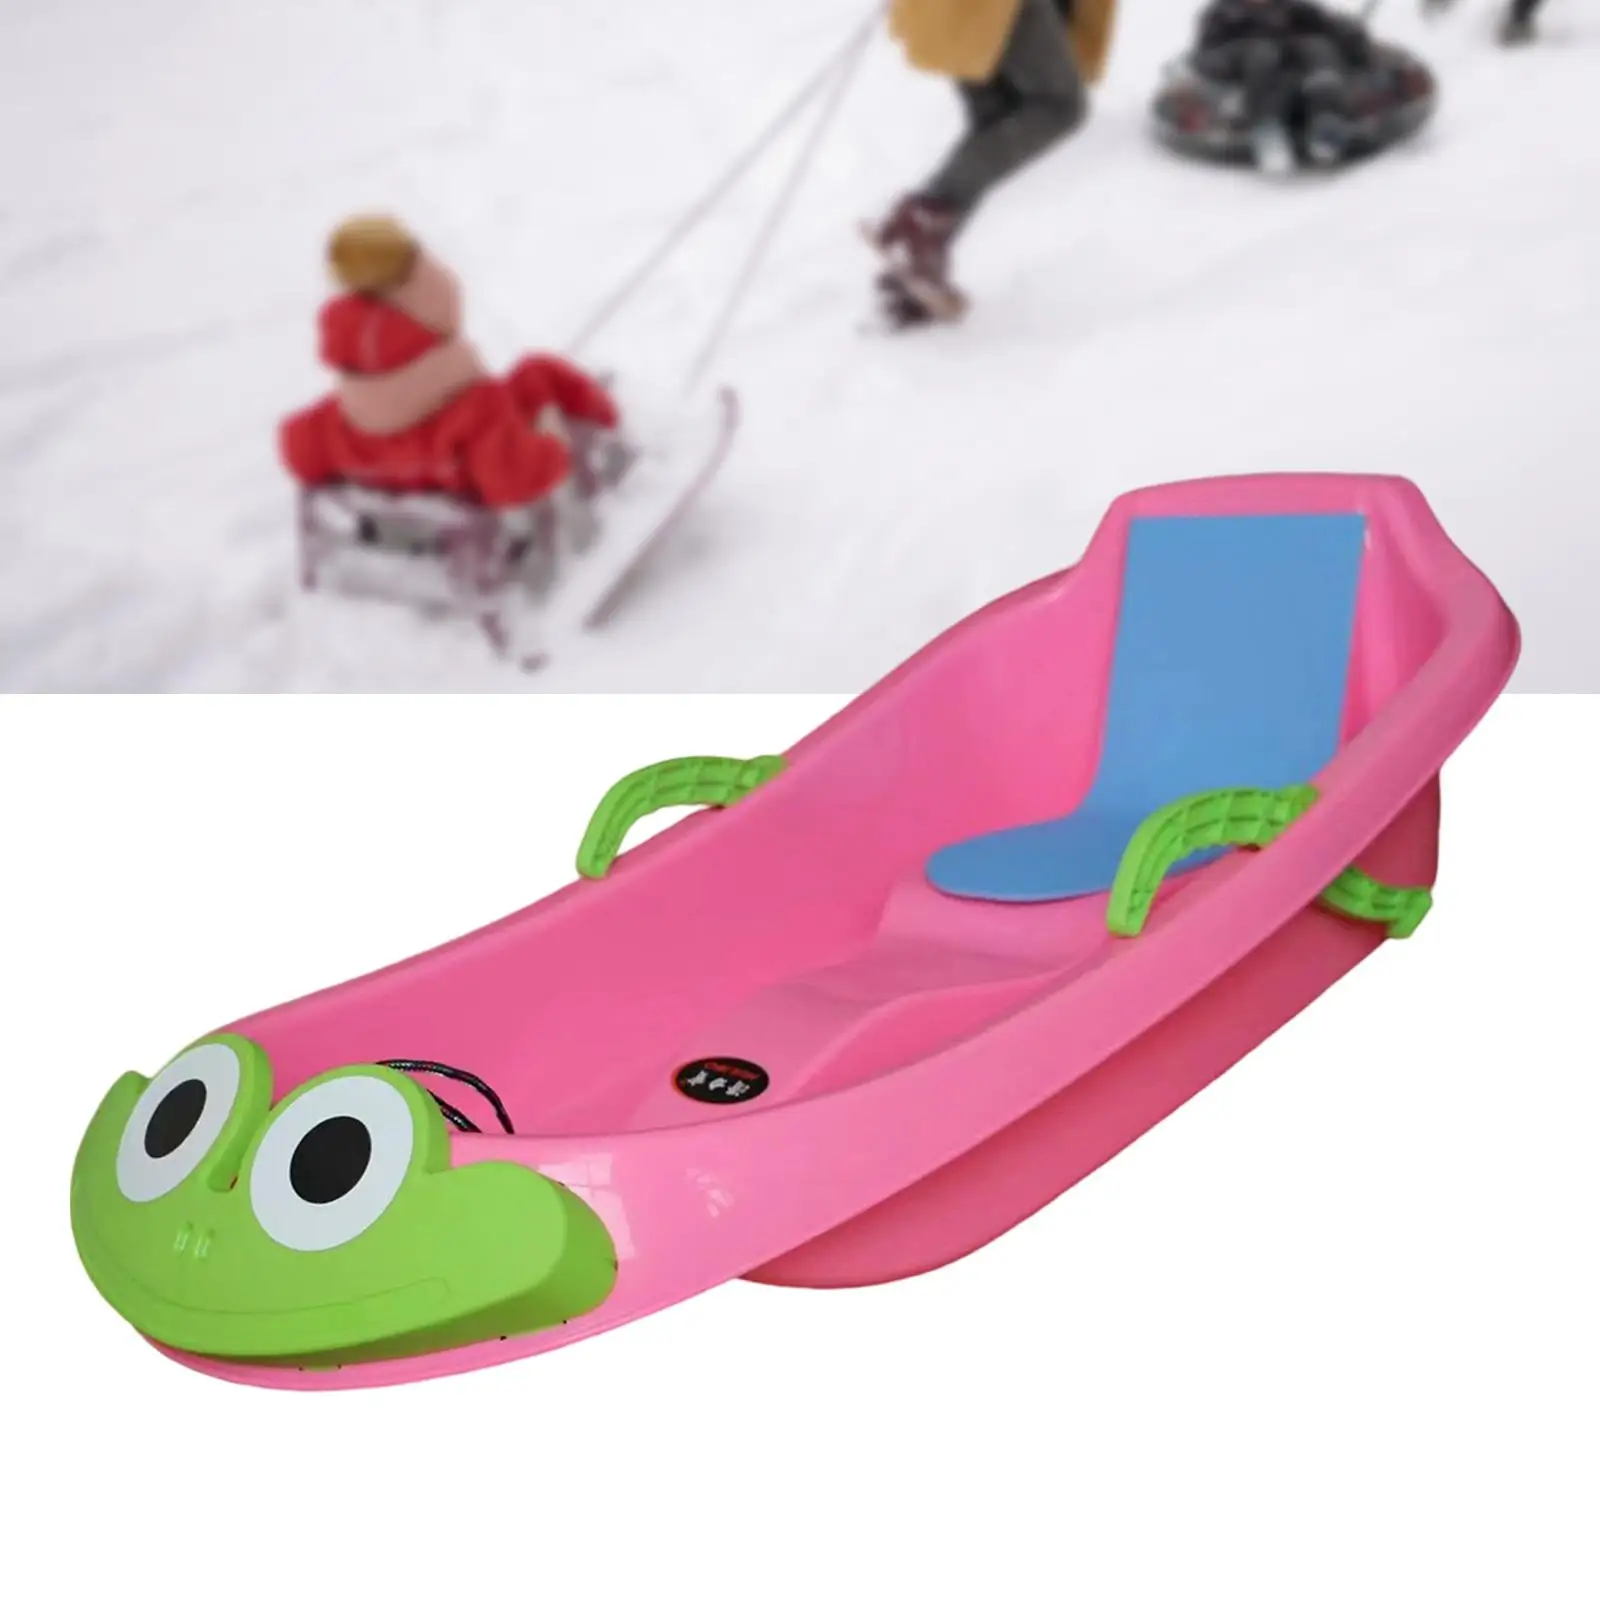 Snow Sled Wear Resistant Non Slip Board Sledge for Skating Skiing Winter